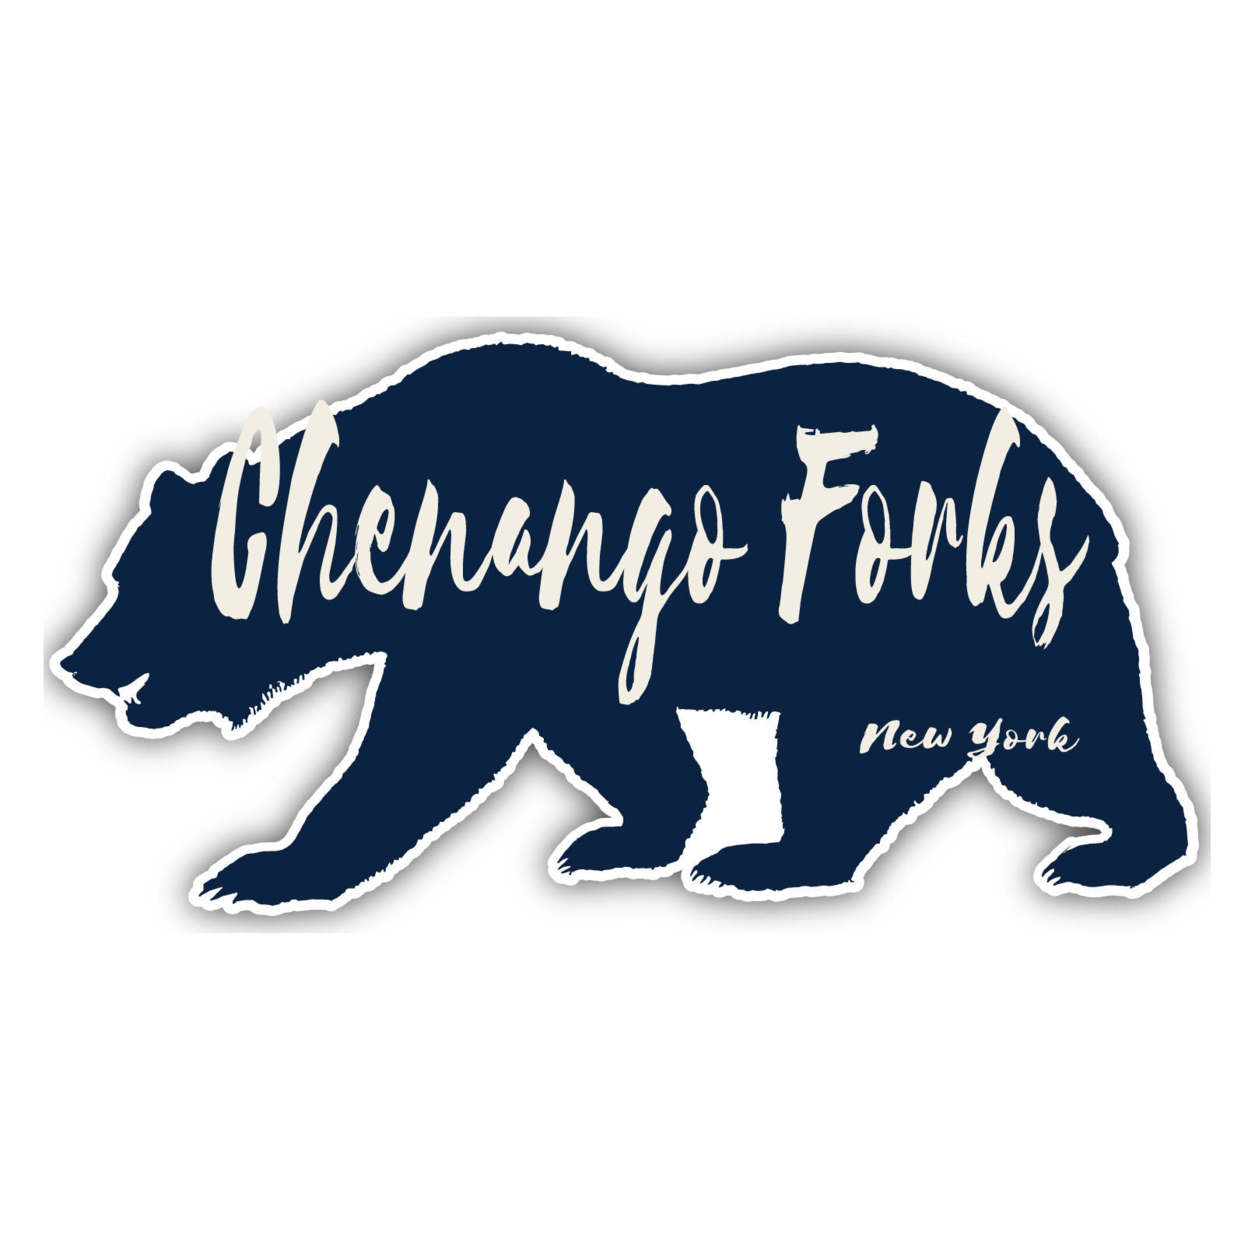 Chenango Forks New York Souvenir Decorative Stickers (Choose Theme And Size) - Single Unit, 12-Inch, Bear